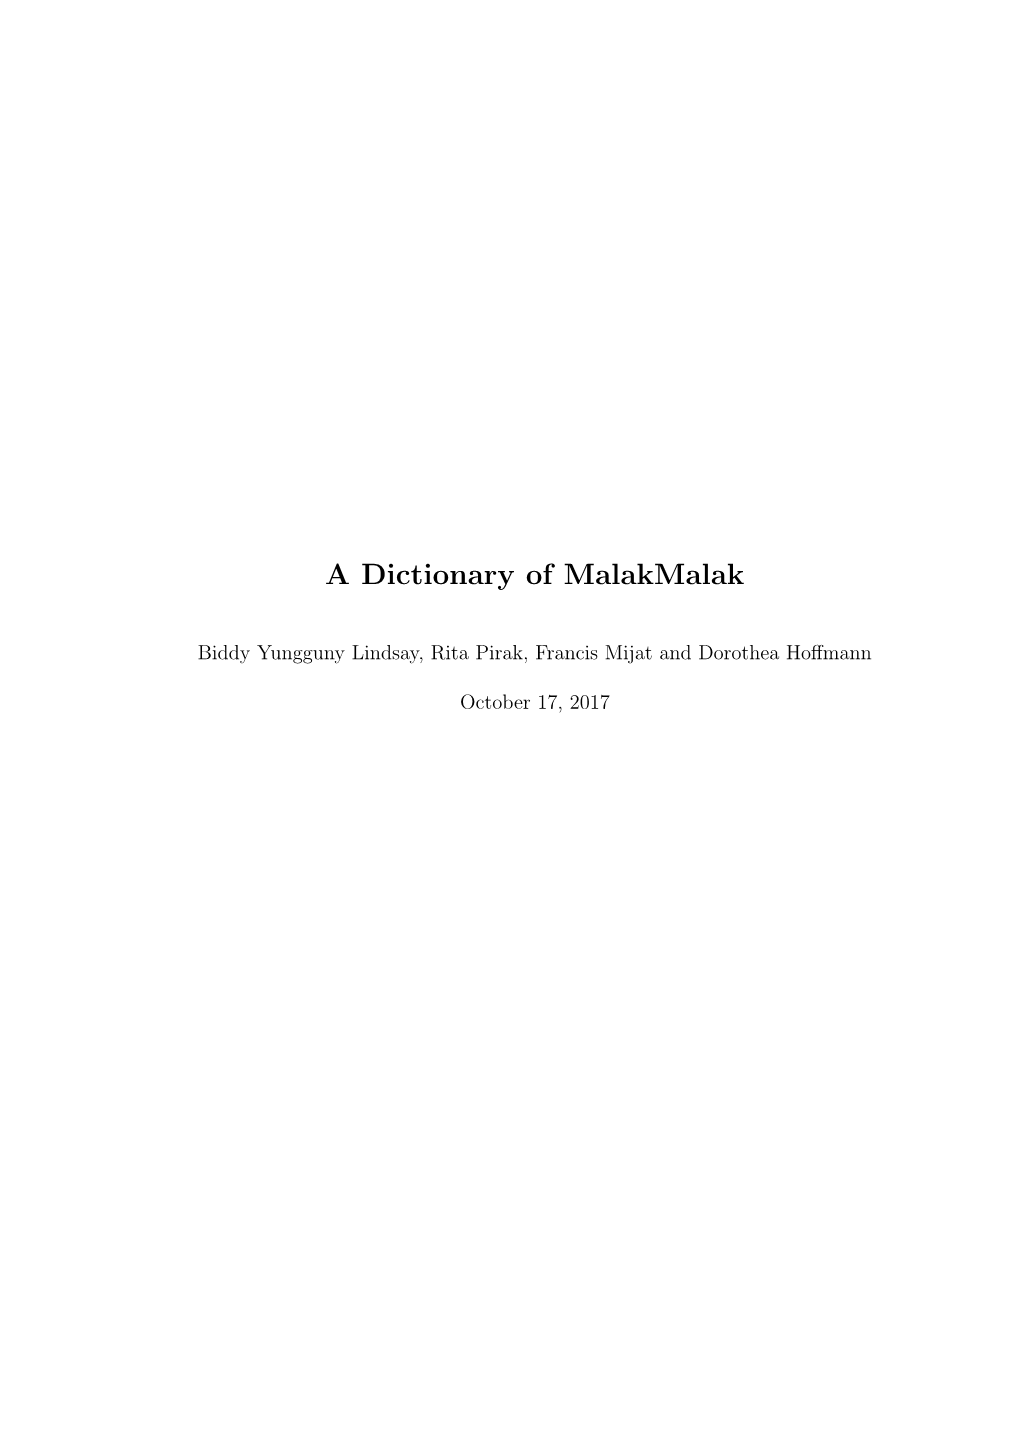 A Dictionary of Malakmalak